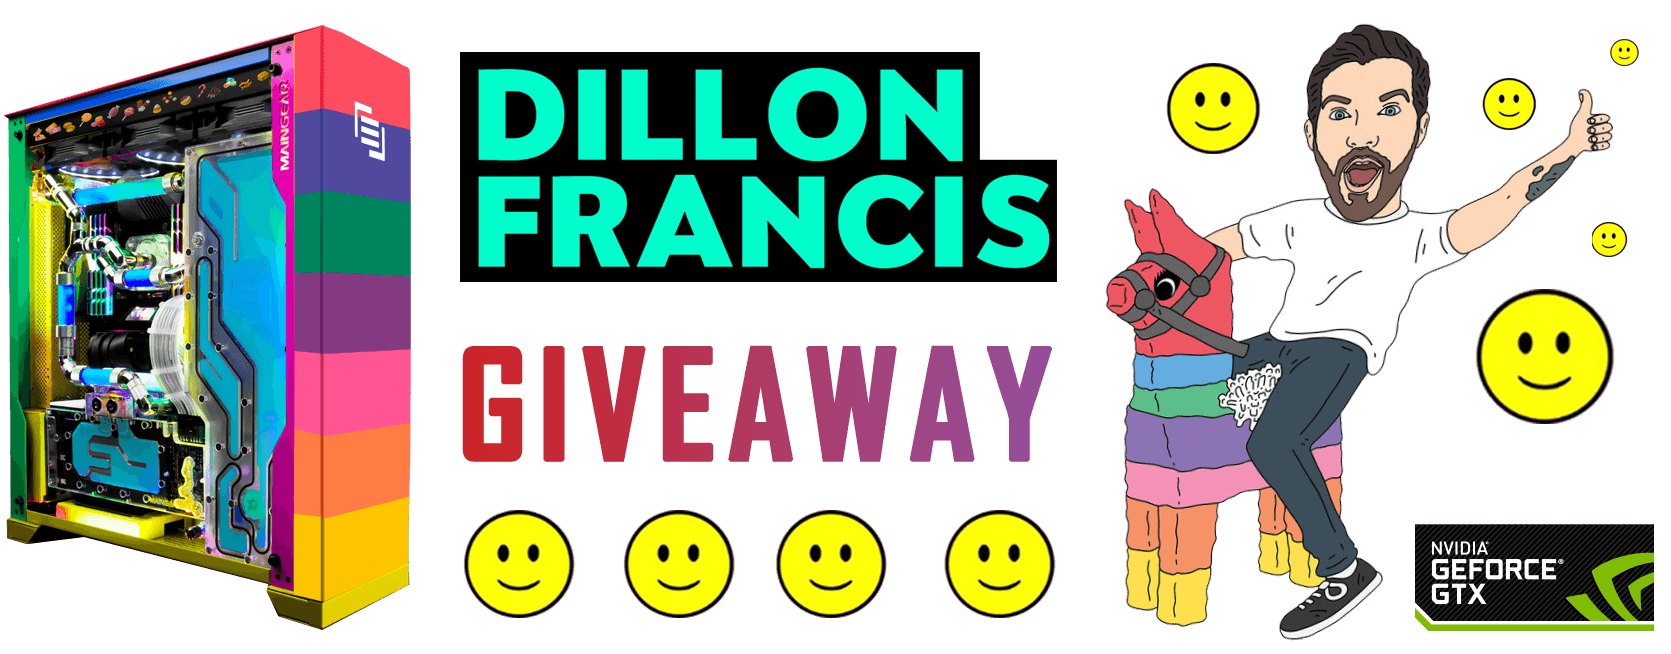 Dillion Francis Logo - MAINGEAR PC | DILLON FRANCIS GIVEAWAY